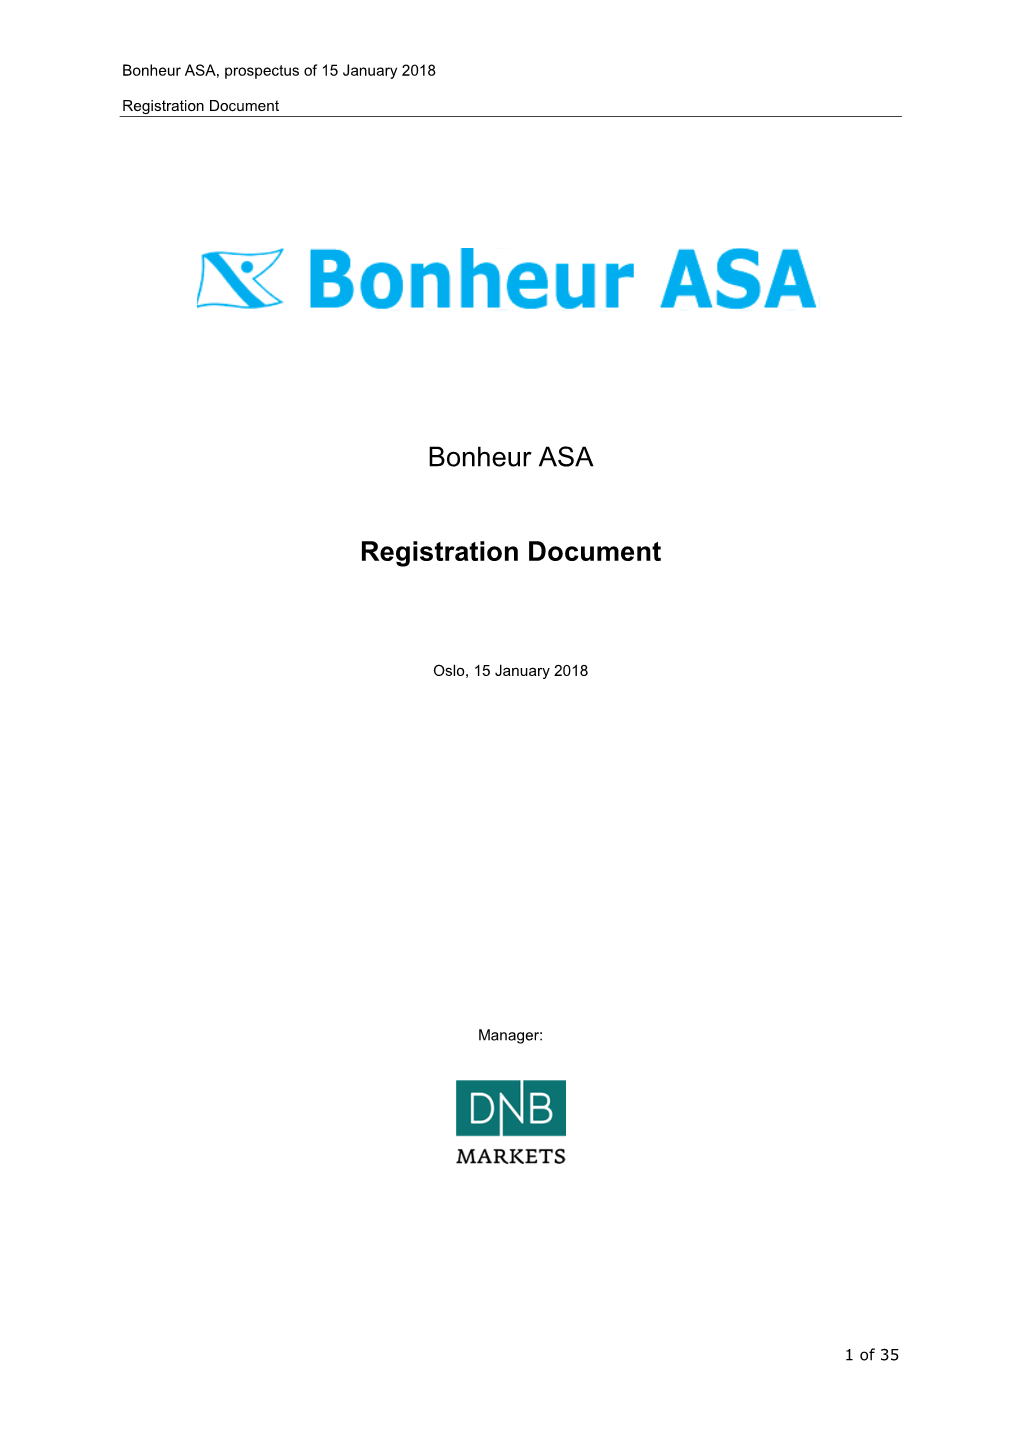 Bonheur ASA Registration Document